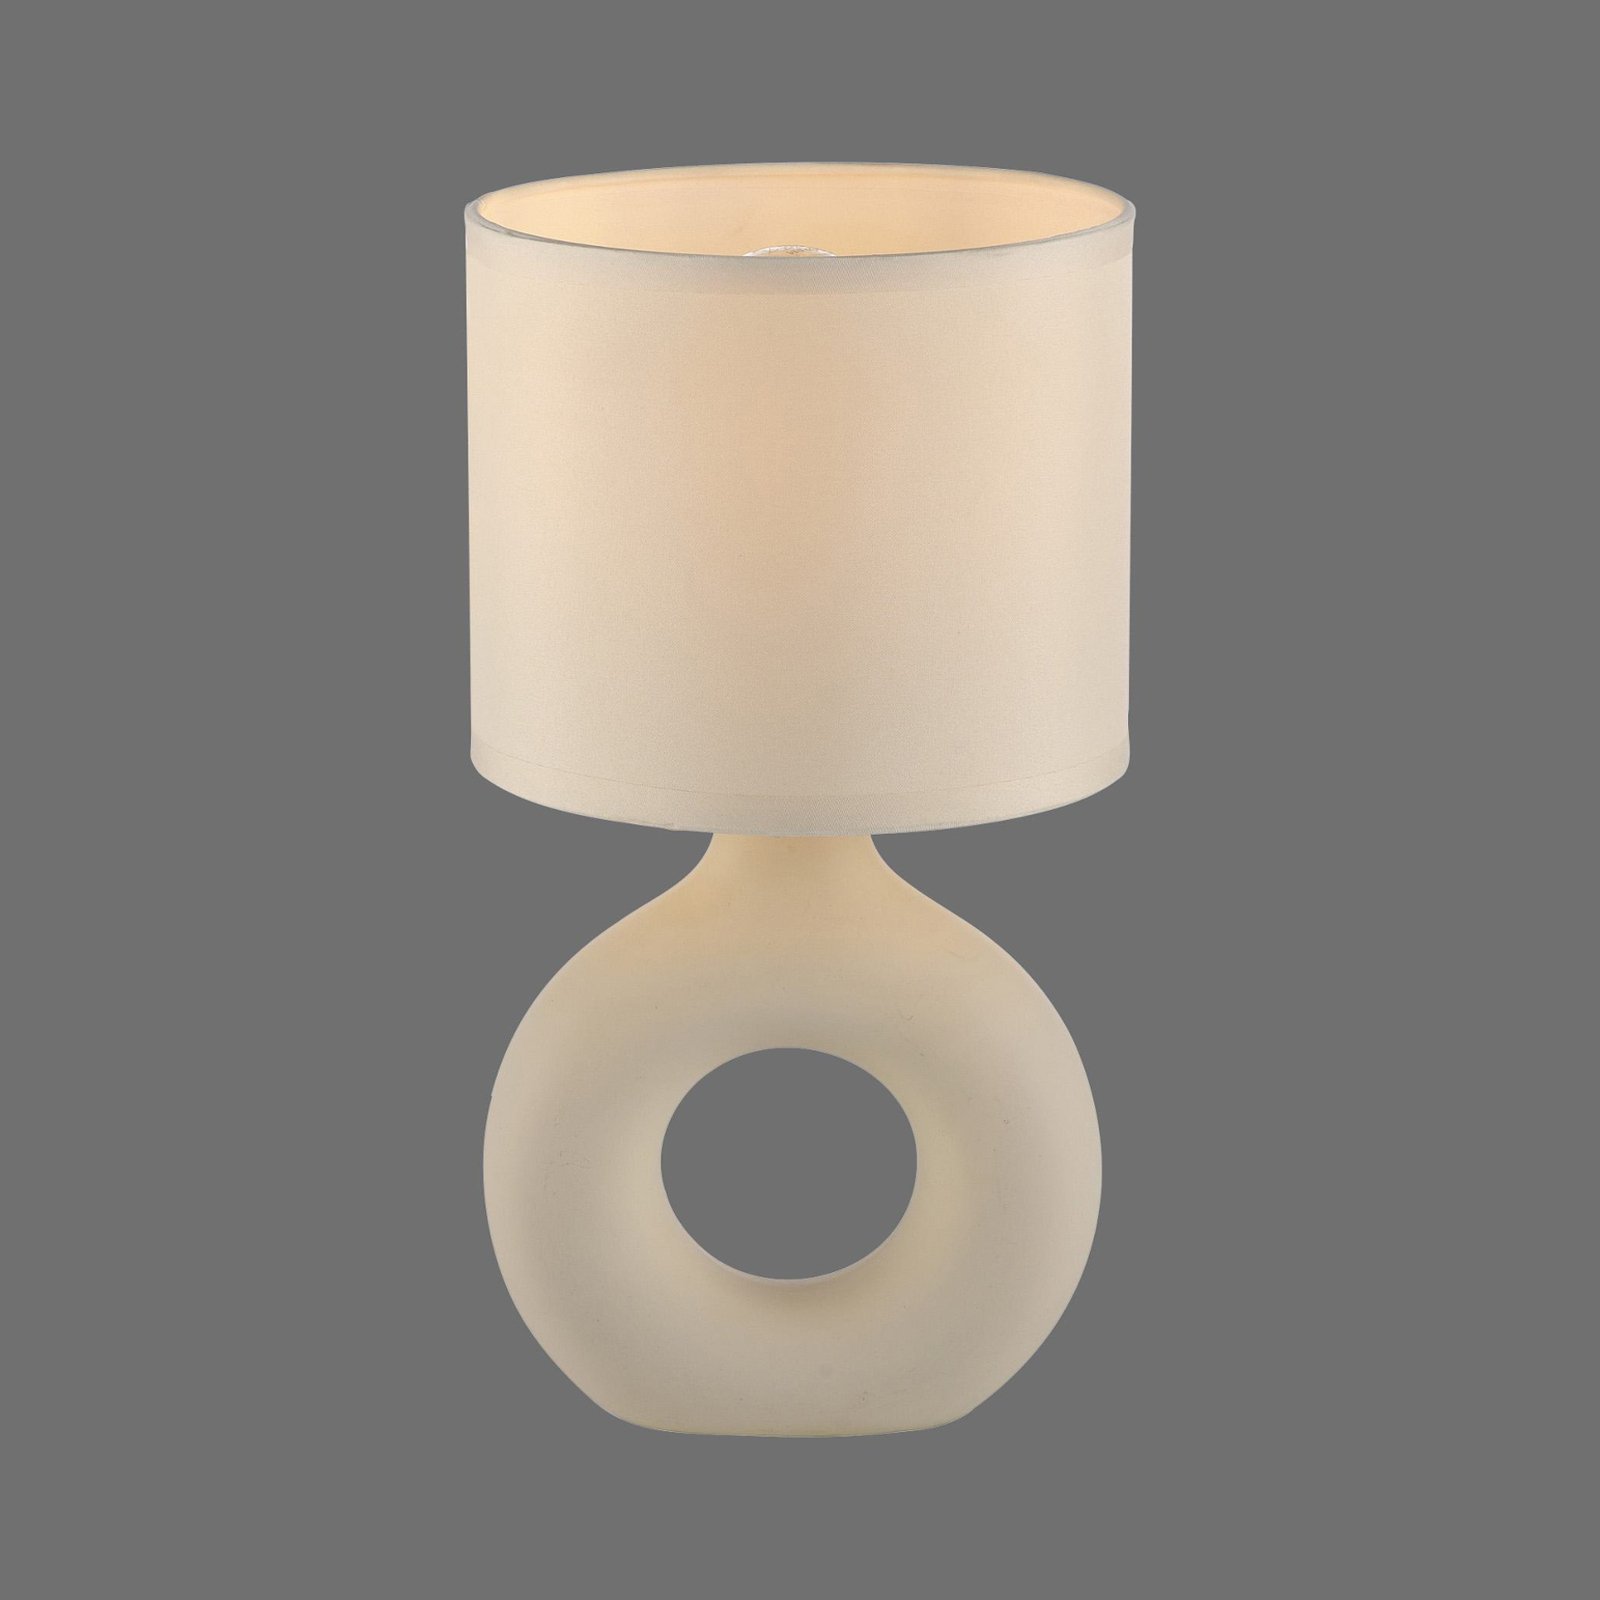 JUST LIGHT. Carara table lamp, ceramic base, beige